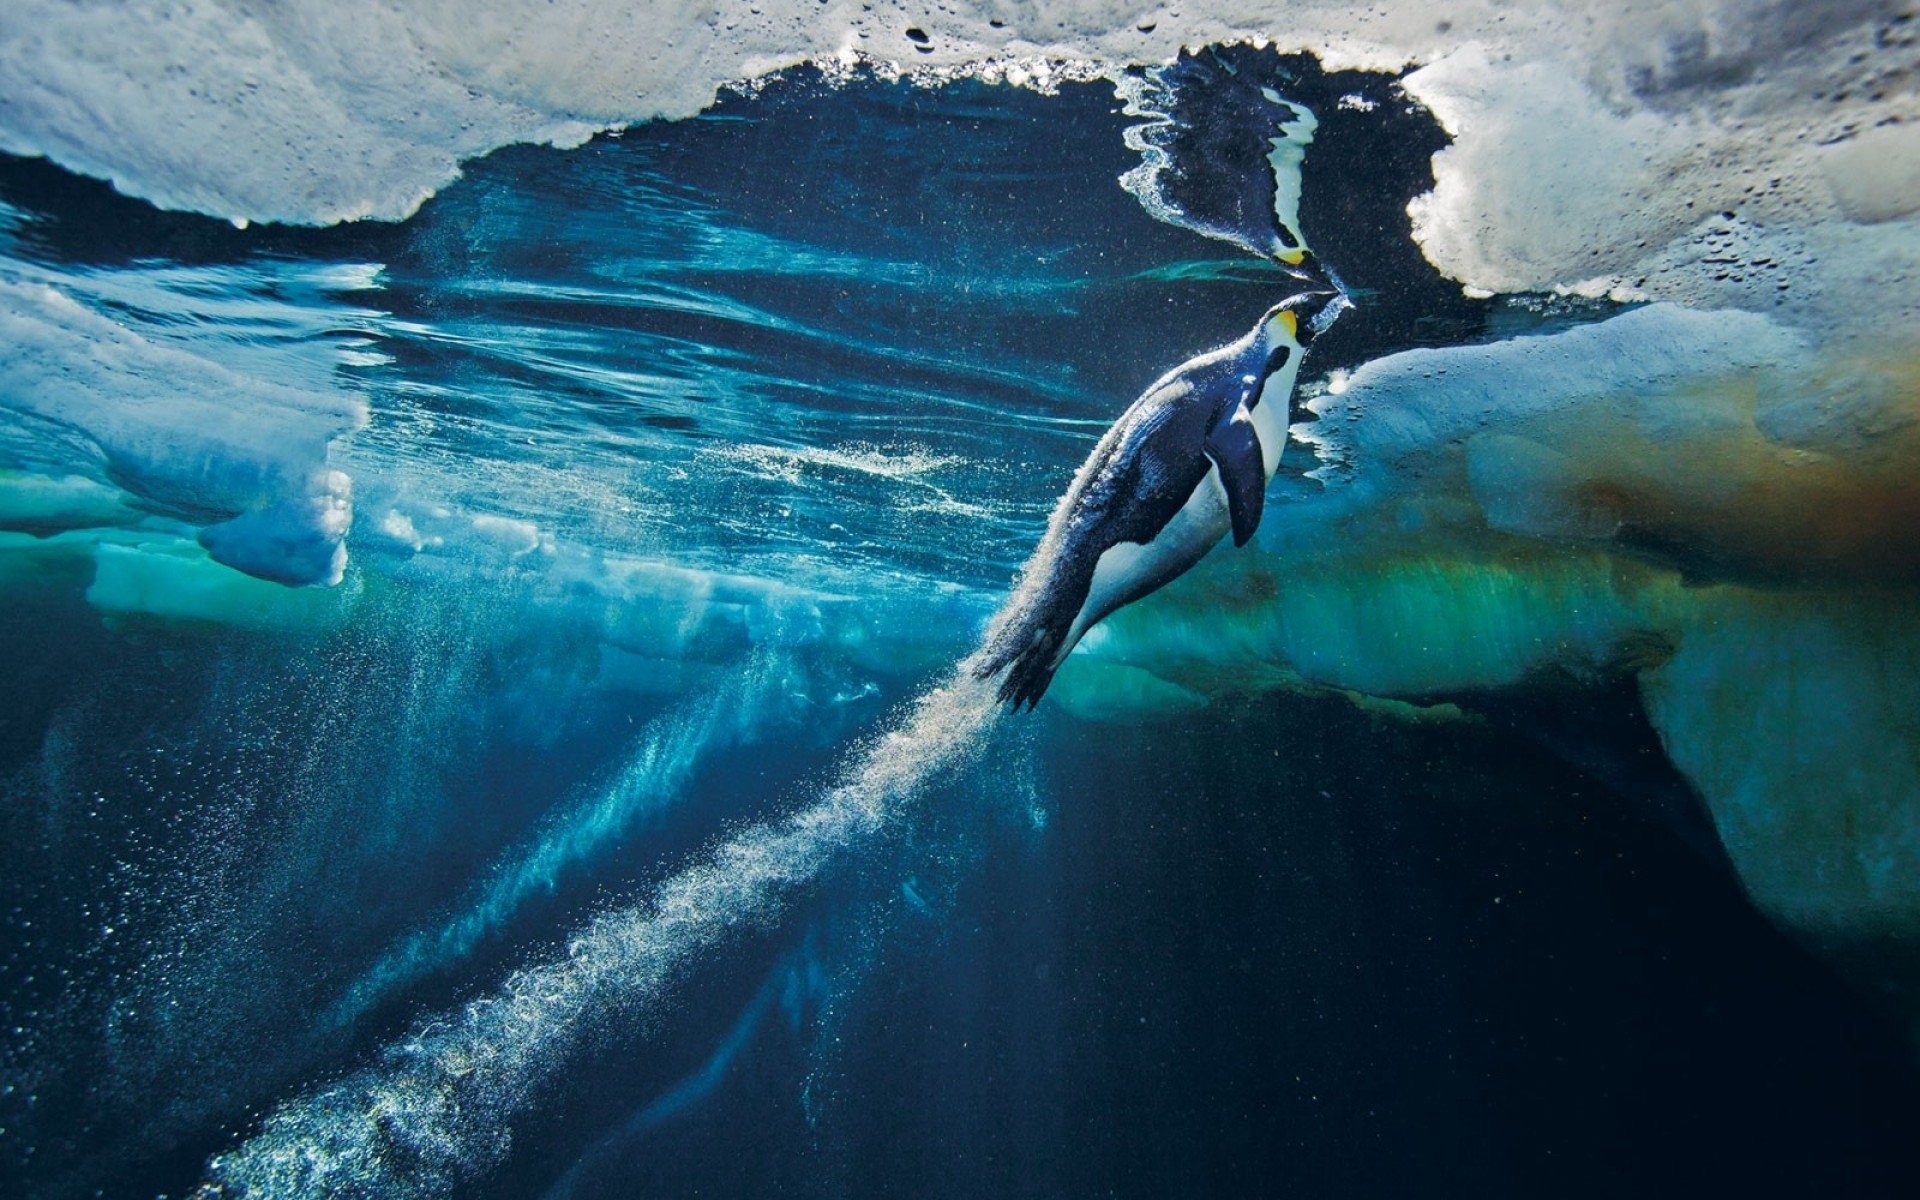 1920x1200 National geographic underwater speed wallpaper nature launch penguins ice  desktop.